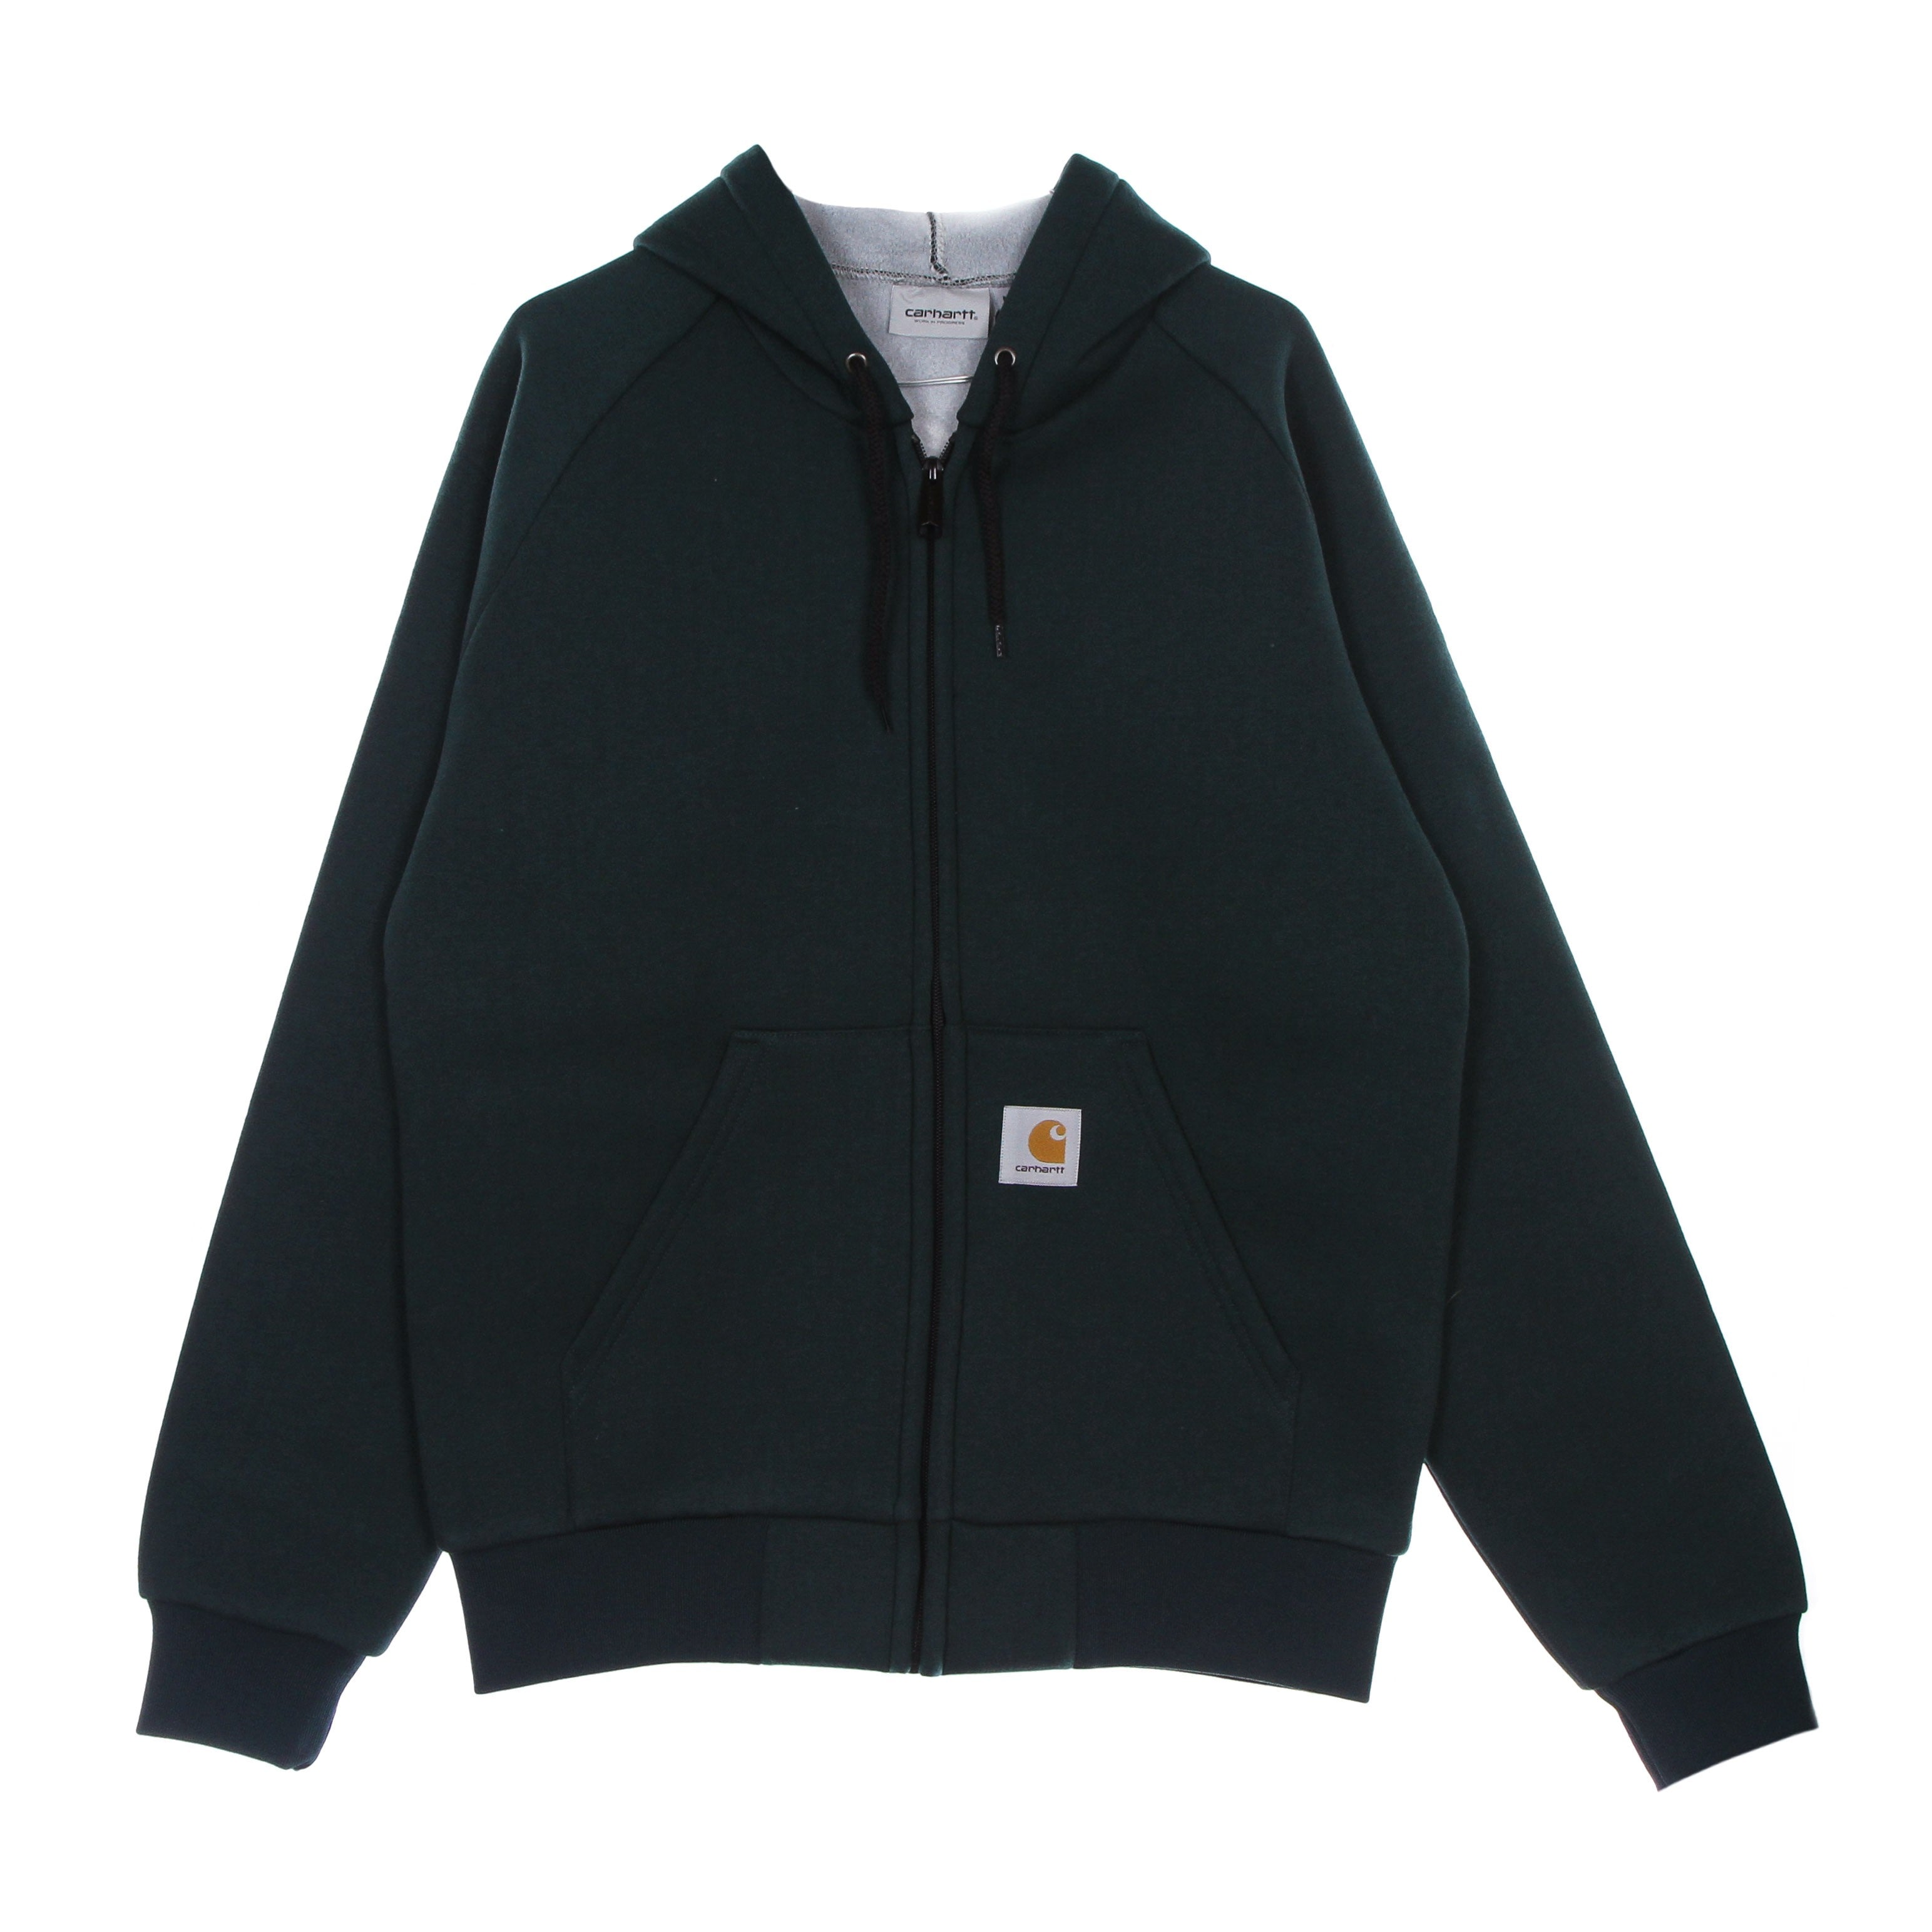 Giubbotto Uomo Car-lux Hooded Jacket Frasier/grey